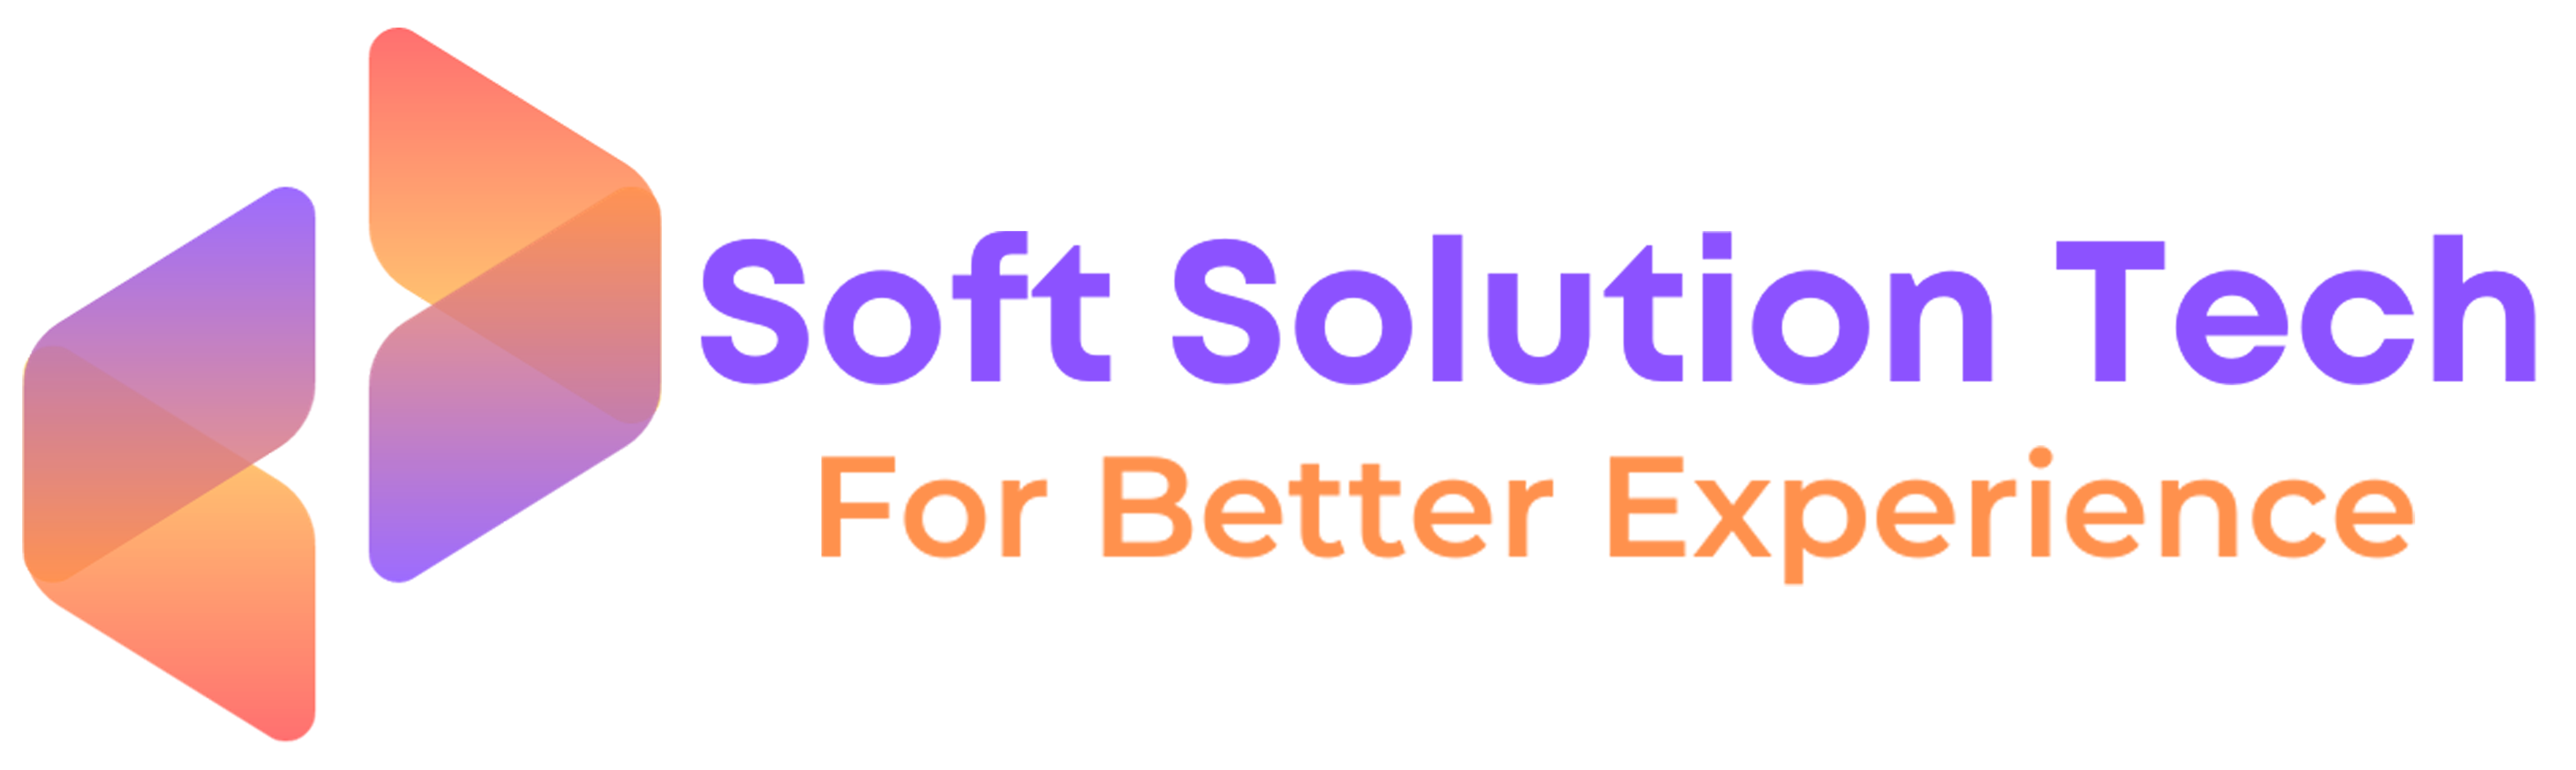 Soft Solution Tech - Home